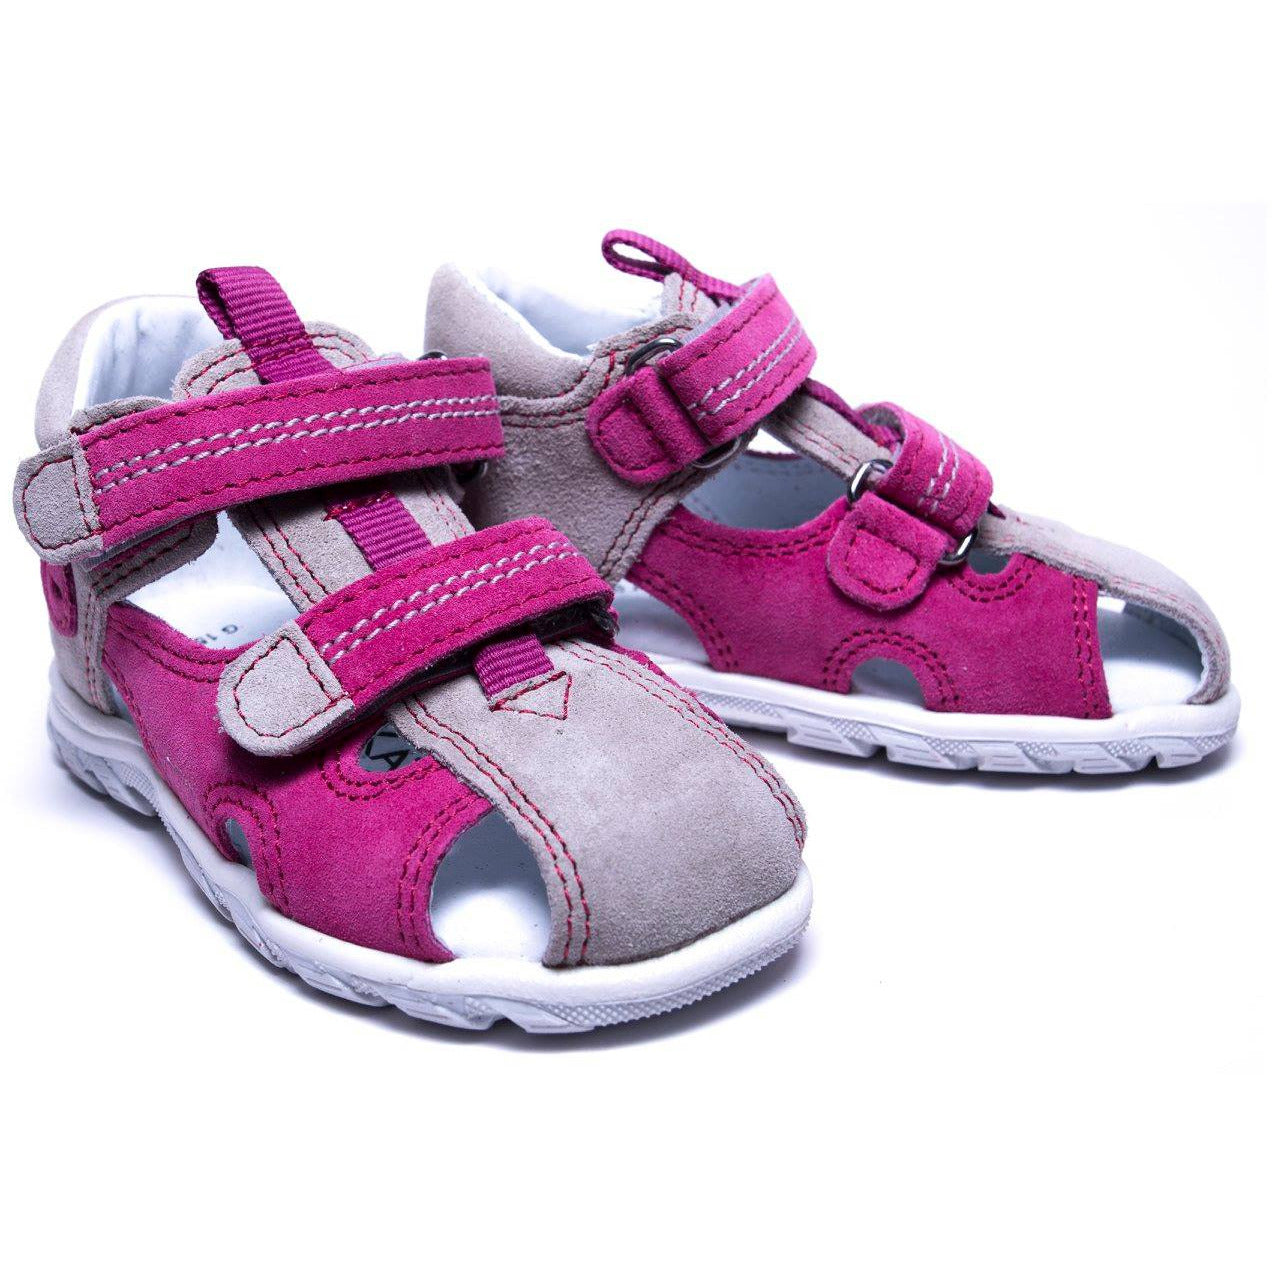 orthopedic toddler girl sandals: T102: color pink grey